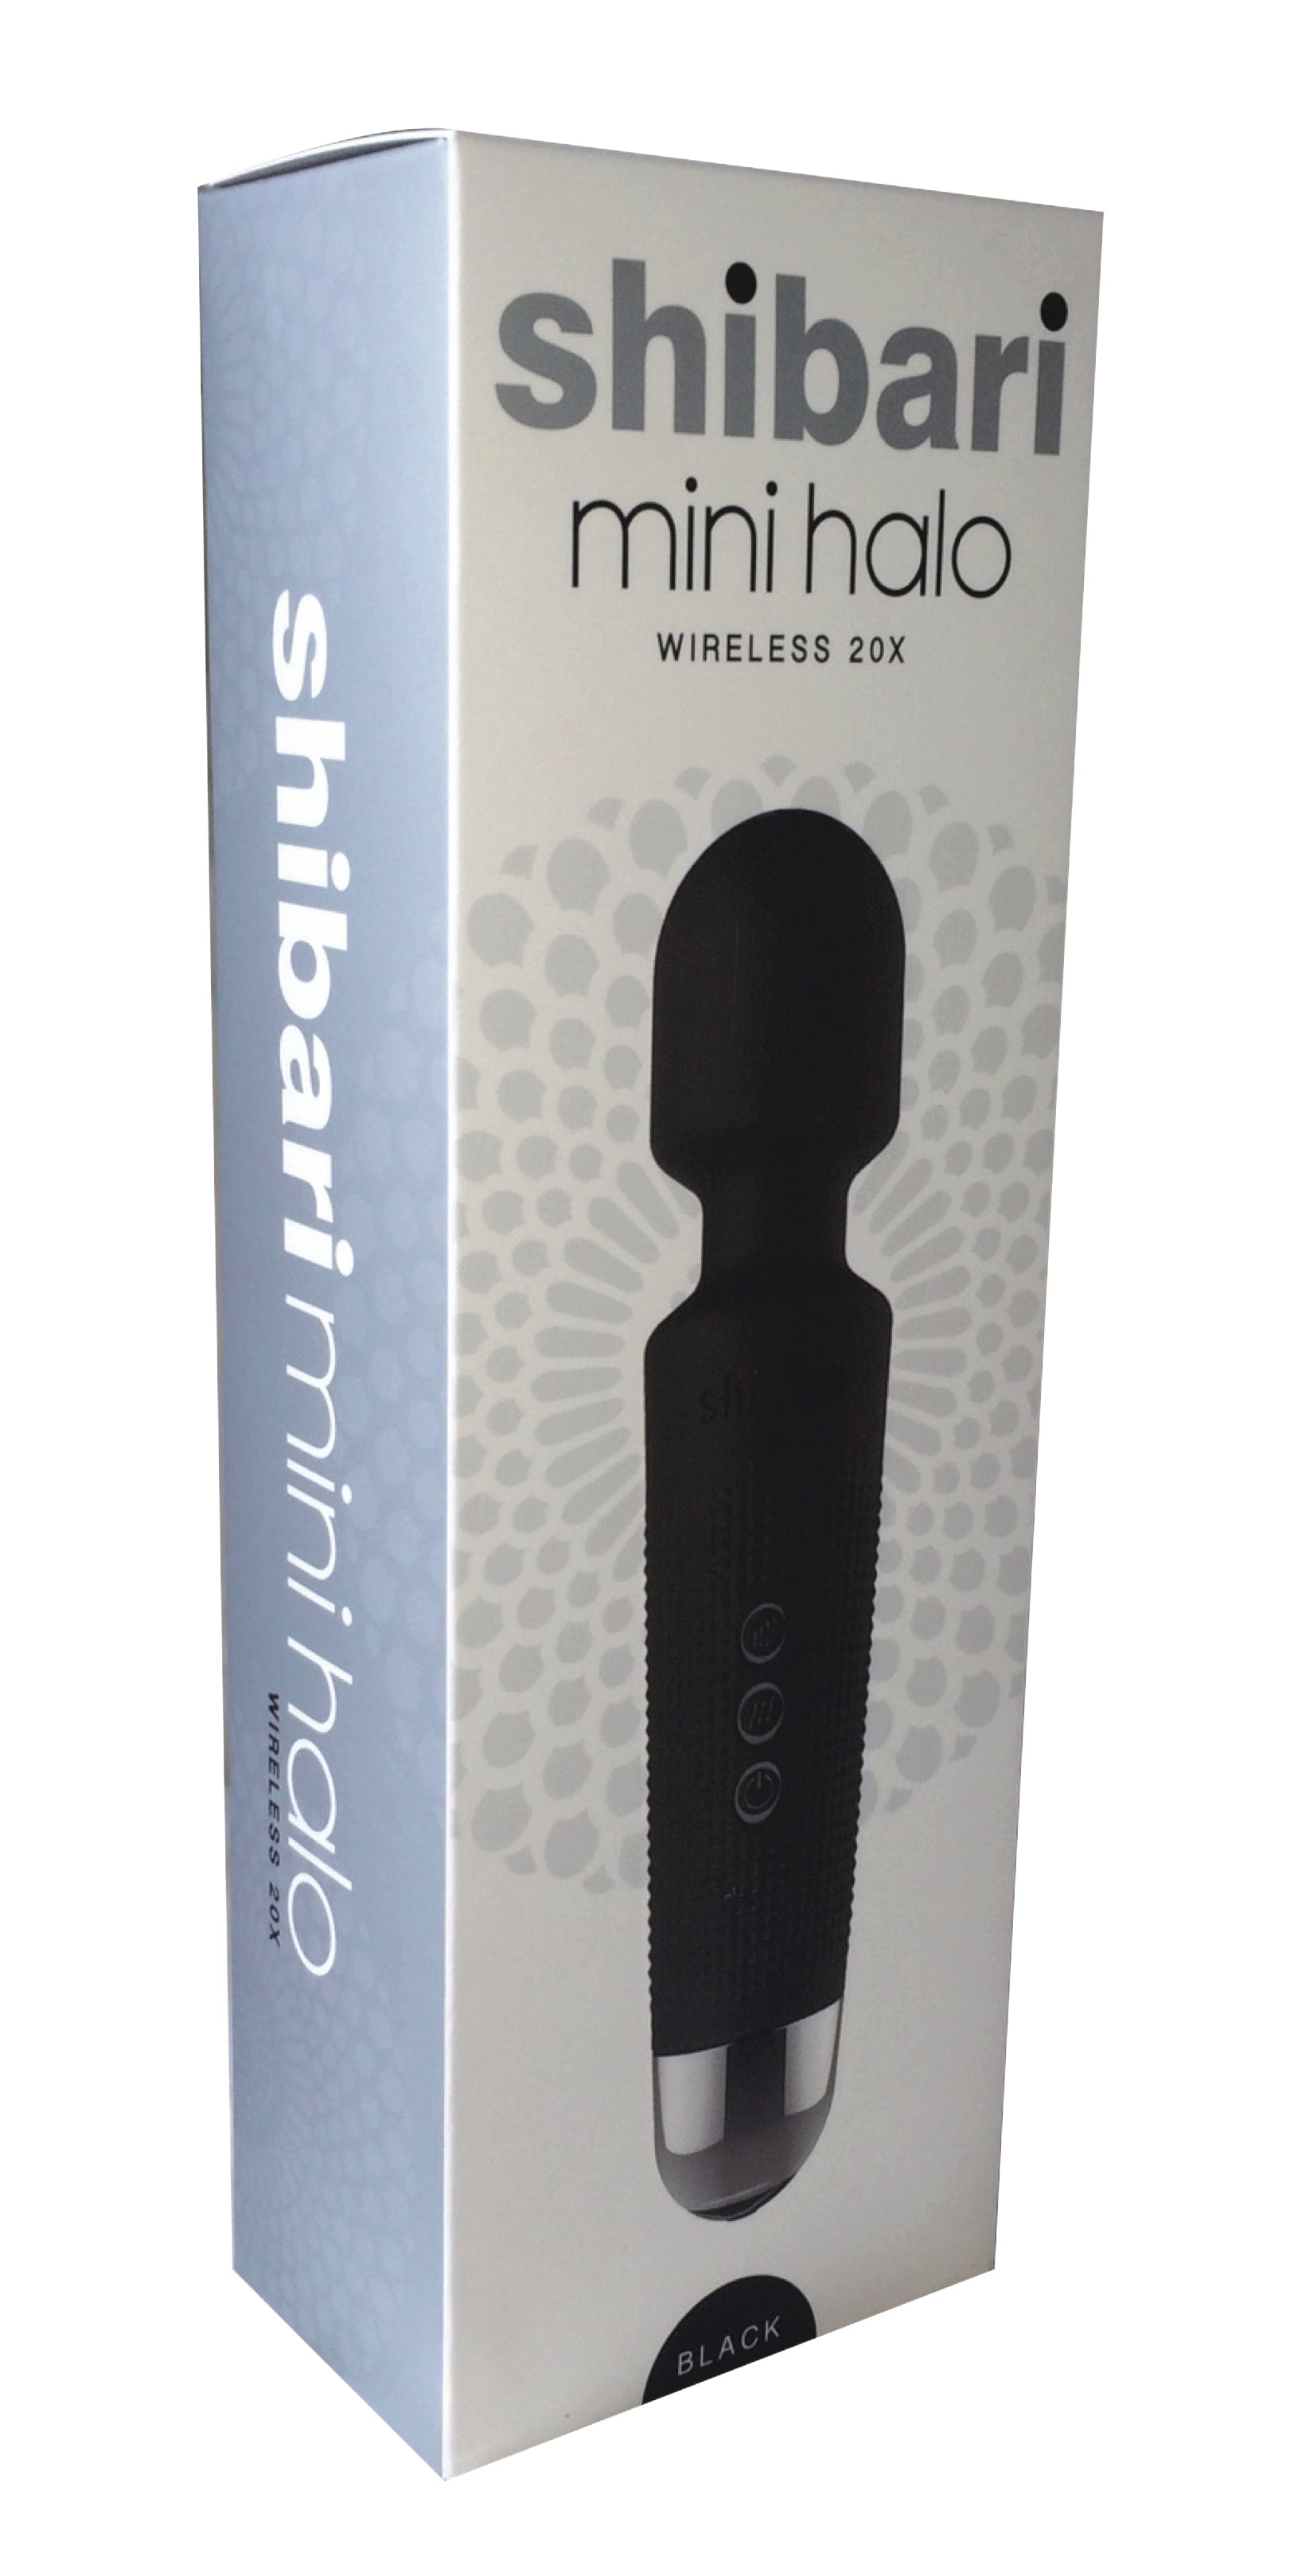 Shibari Adult Toys Black Shibari Mini Halo Wireless 20X Black 859612003219